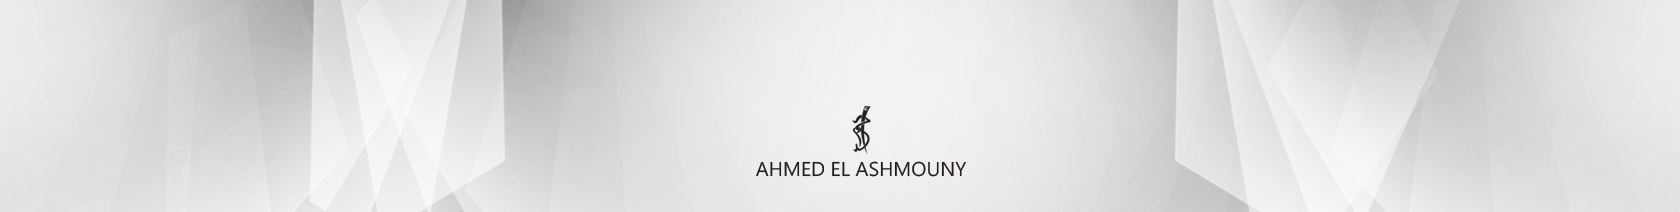 Profielbanner van Ahmed Al Ashmouny